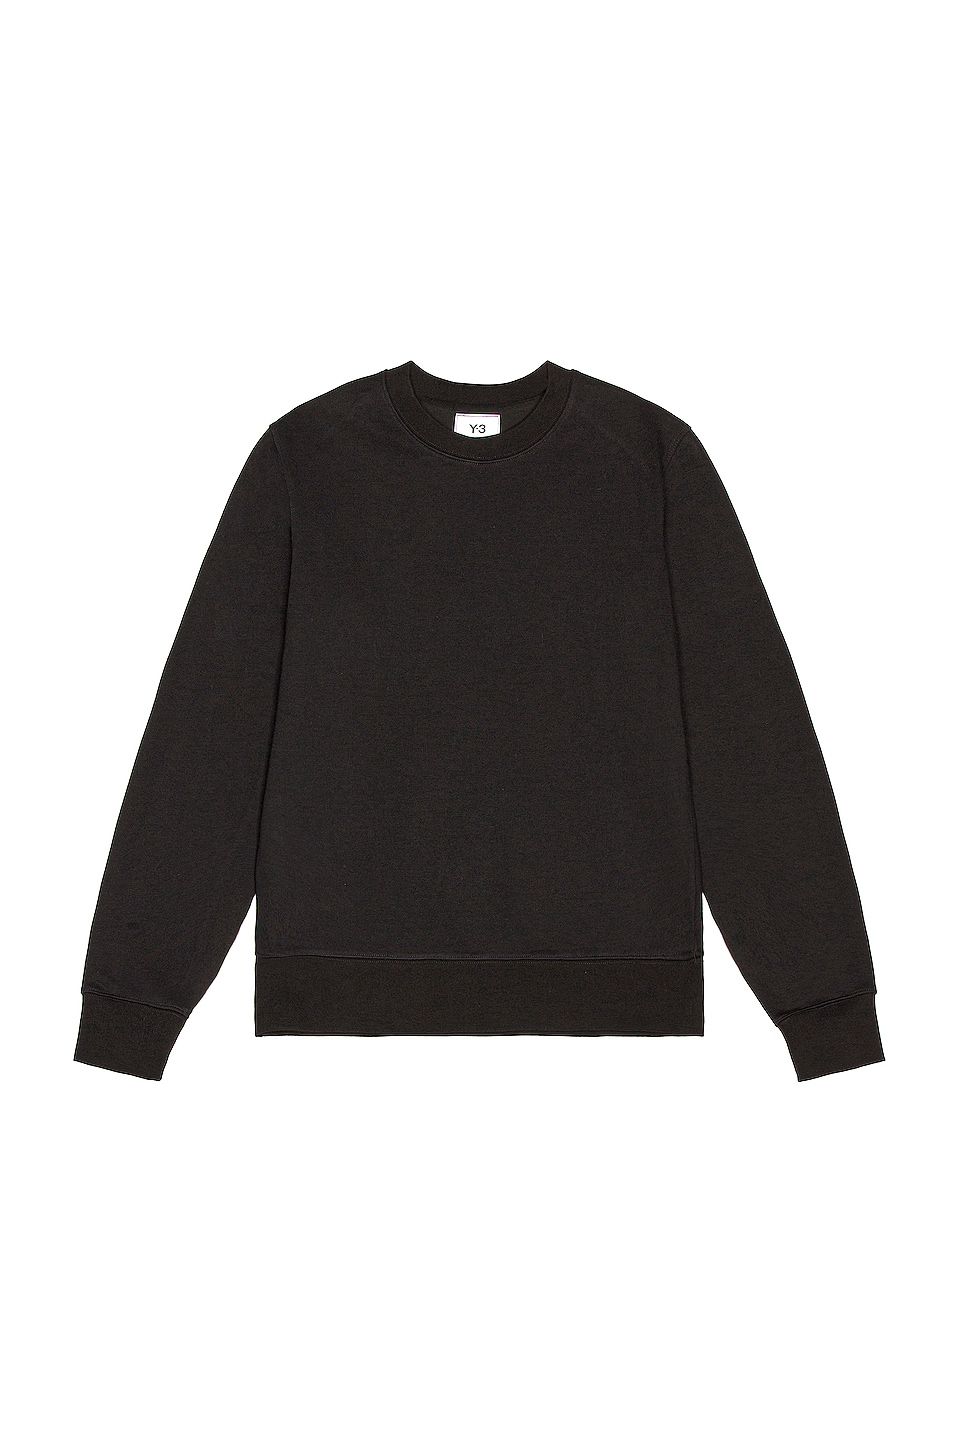 y3 black sweatshirt